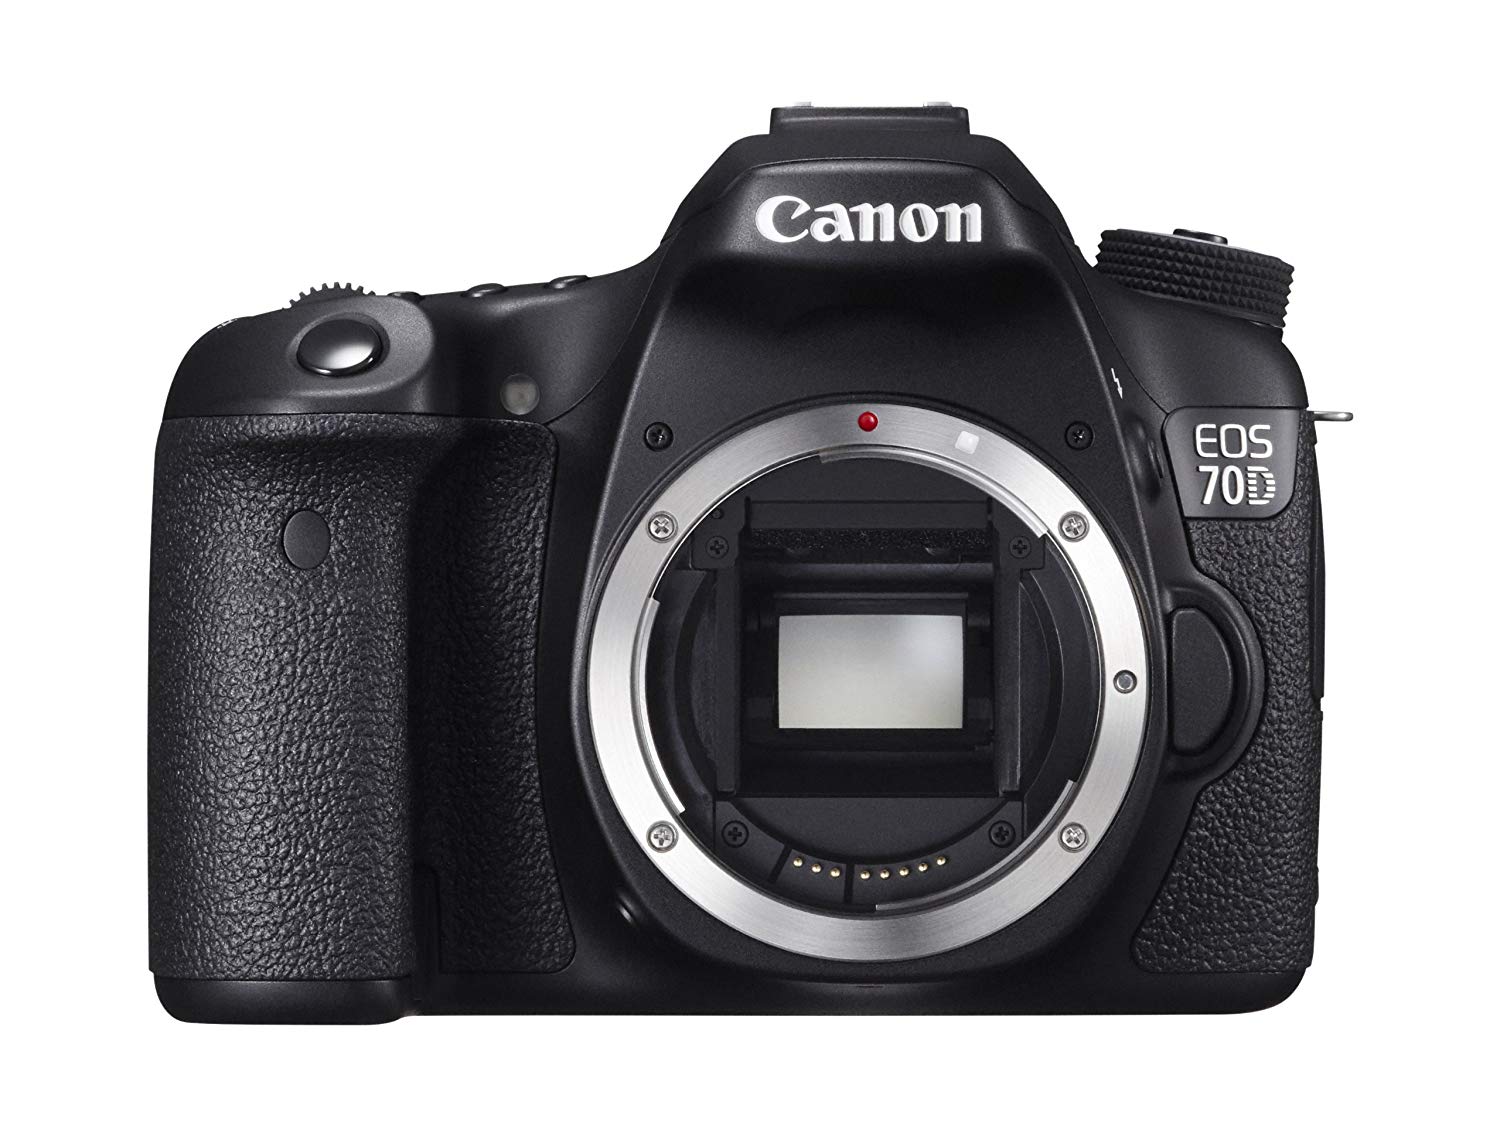 Canon Cameras Canon EOS 70D (8469B002) Digital SLR Cameras Black 20.2 MP Digital SLR Camera - Body